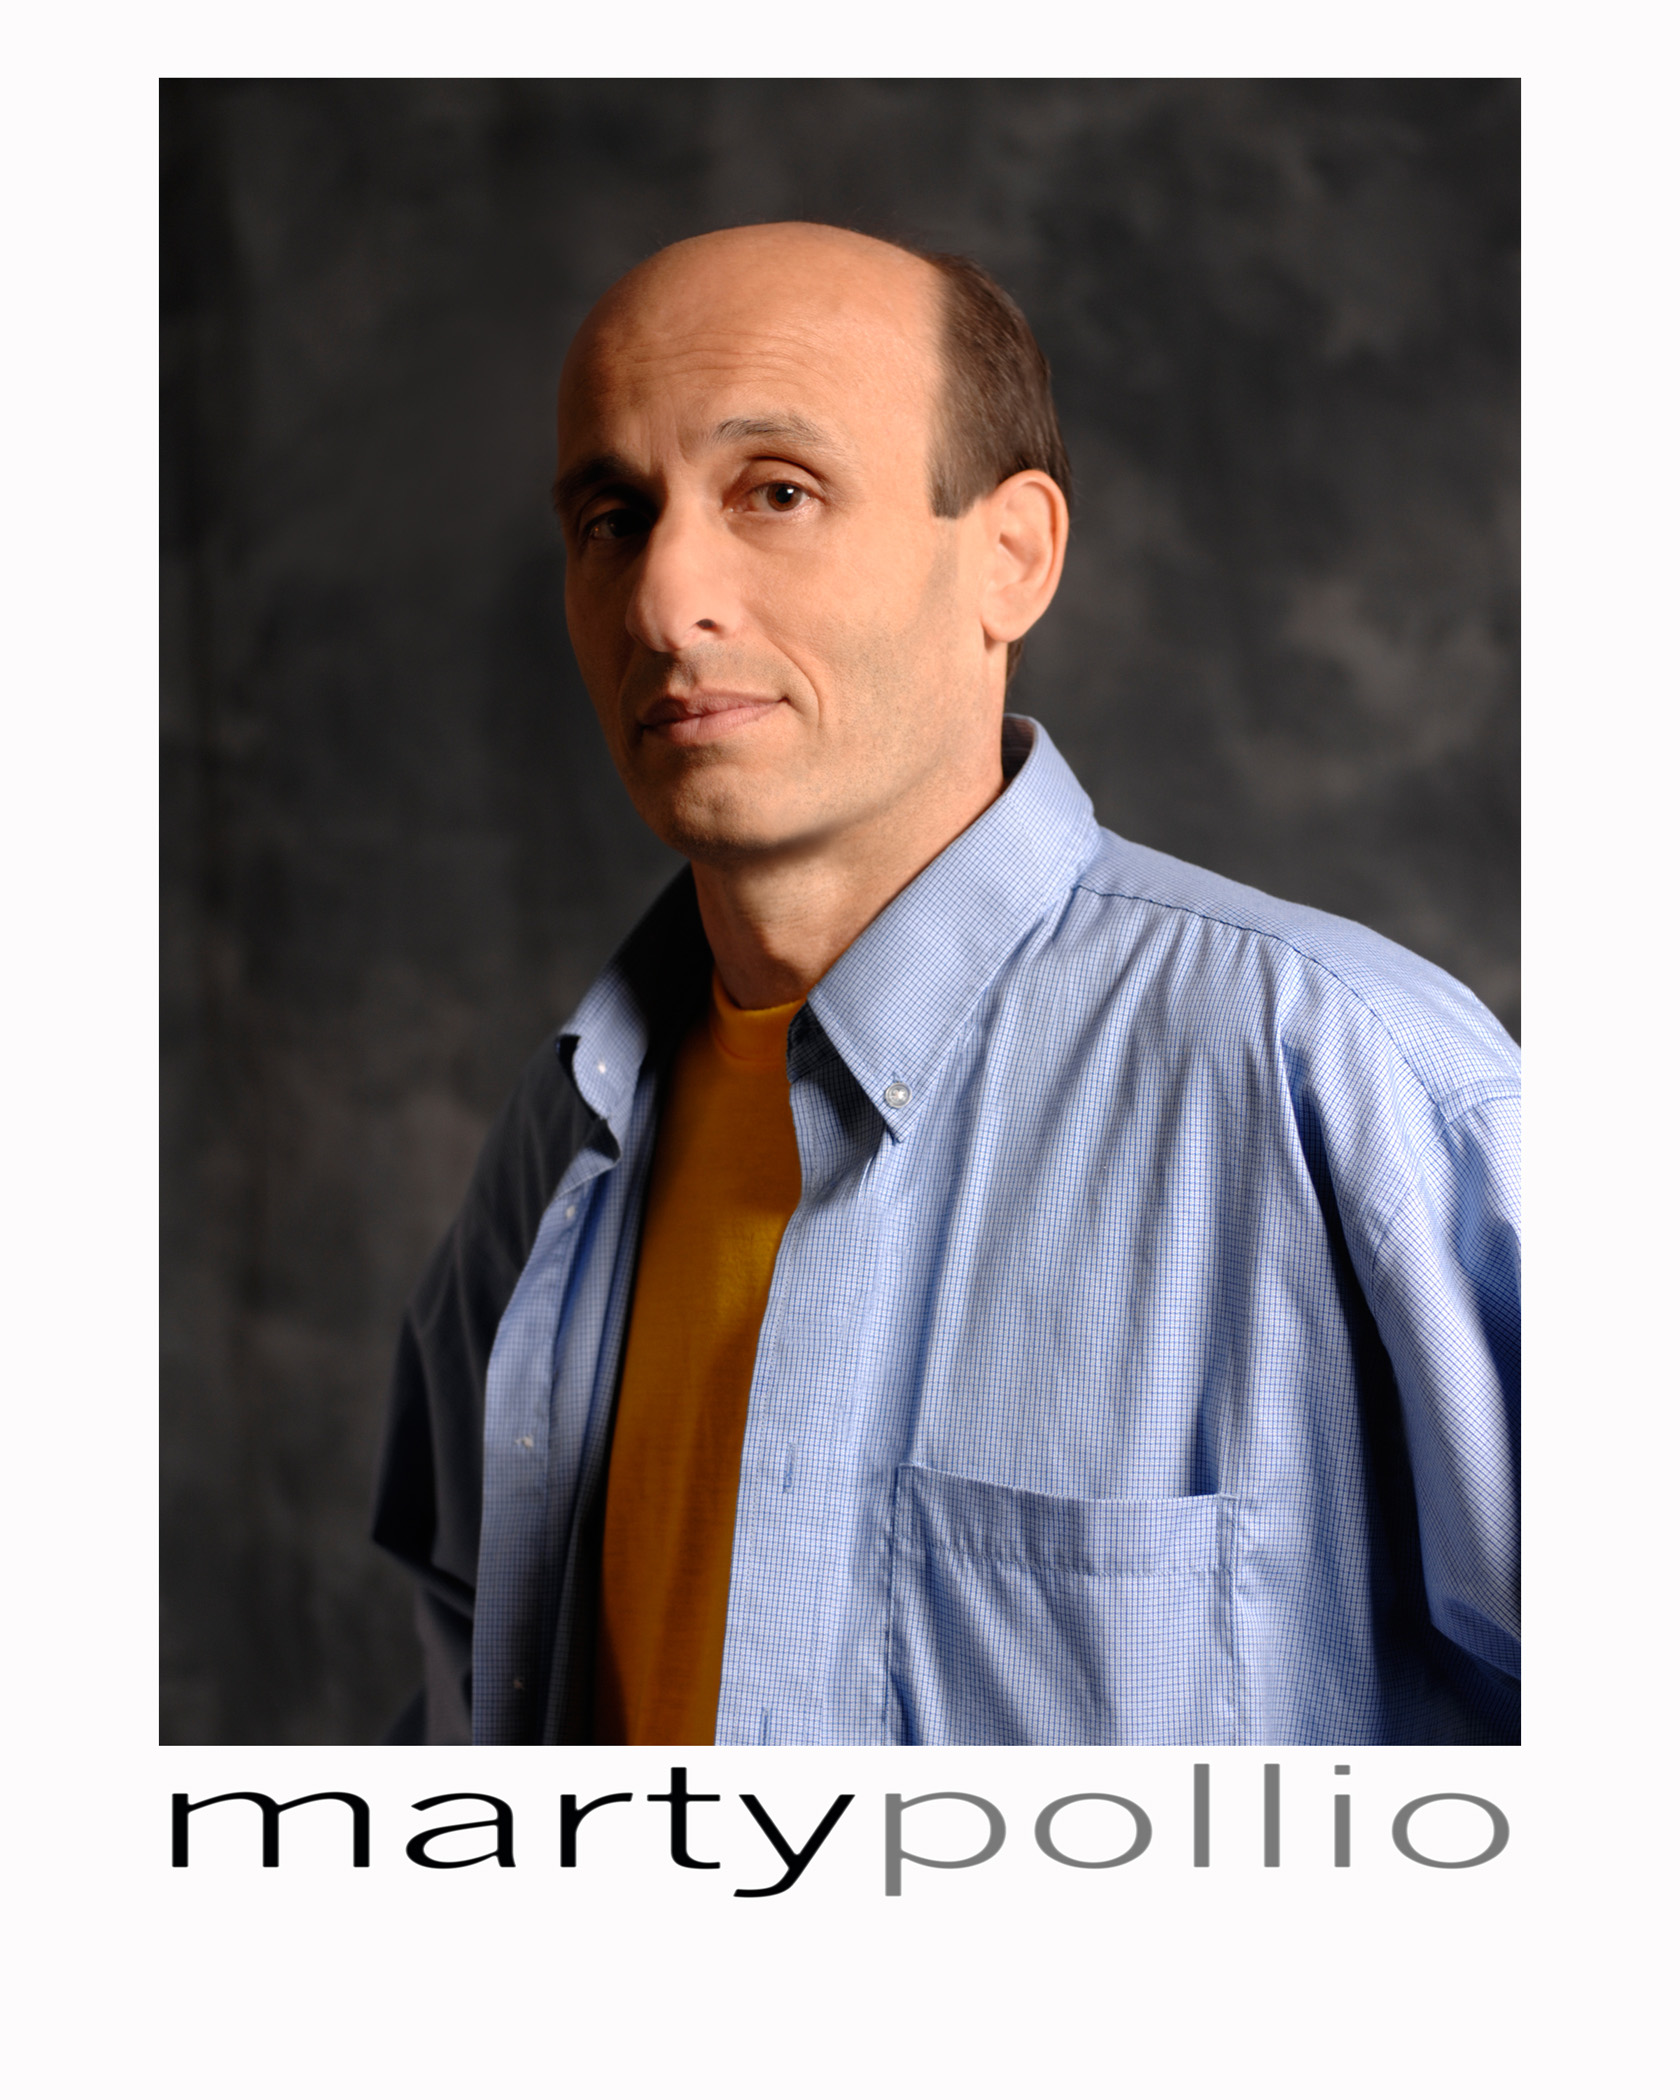 Marty Pollio